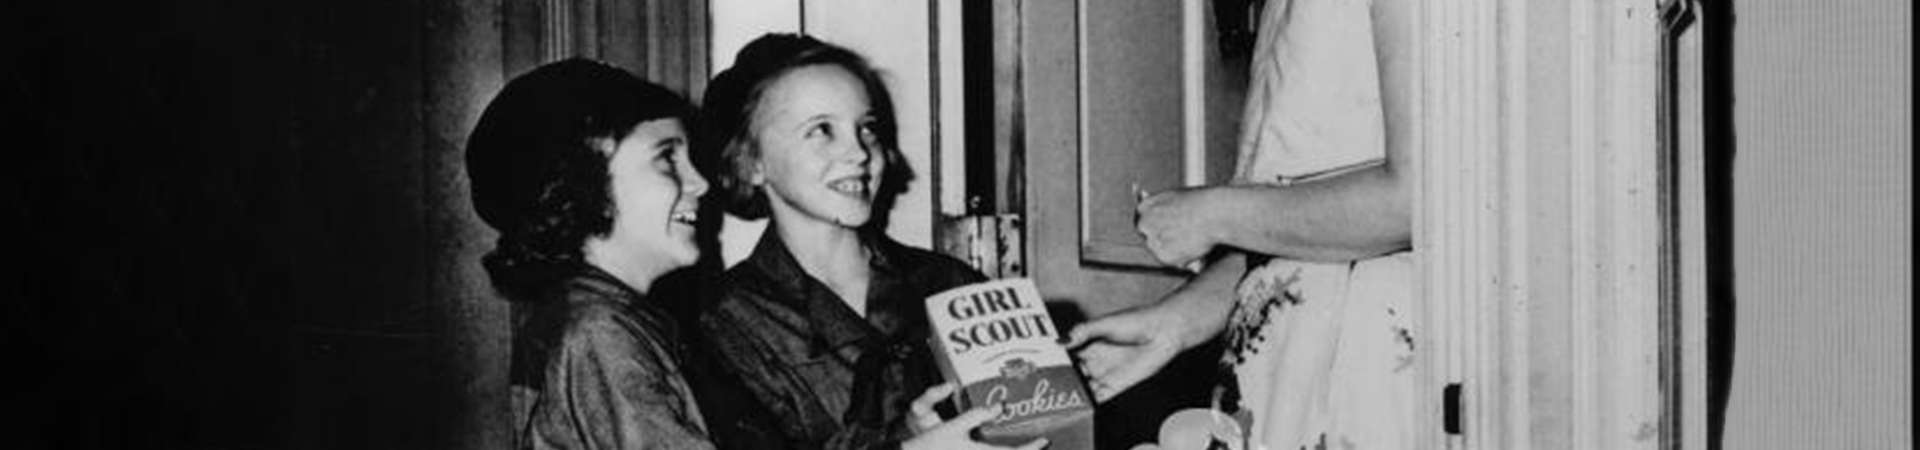 www.girlscouts.org